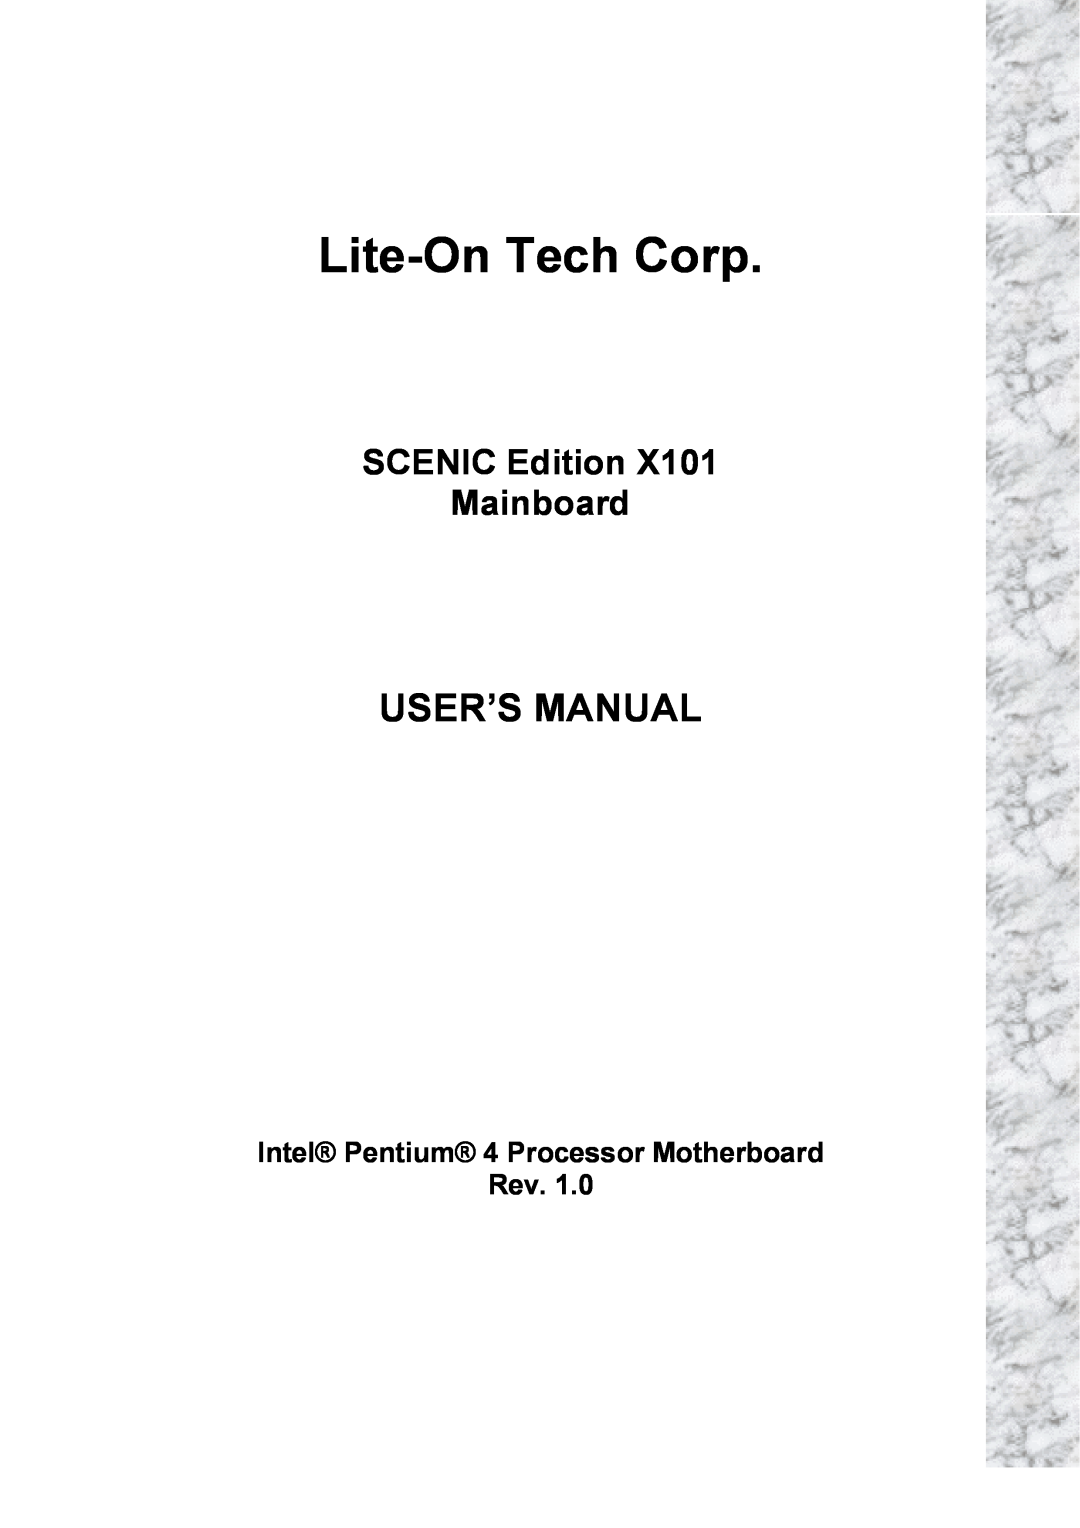 Intel X101 user manual SCENIC Edition Mainboard, Intel Pentium 4 Processor Motherboard Rev, Lite-On Tech Corp 